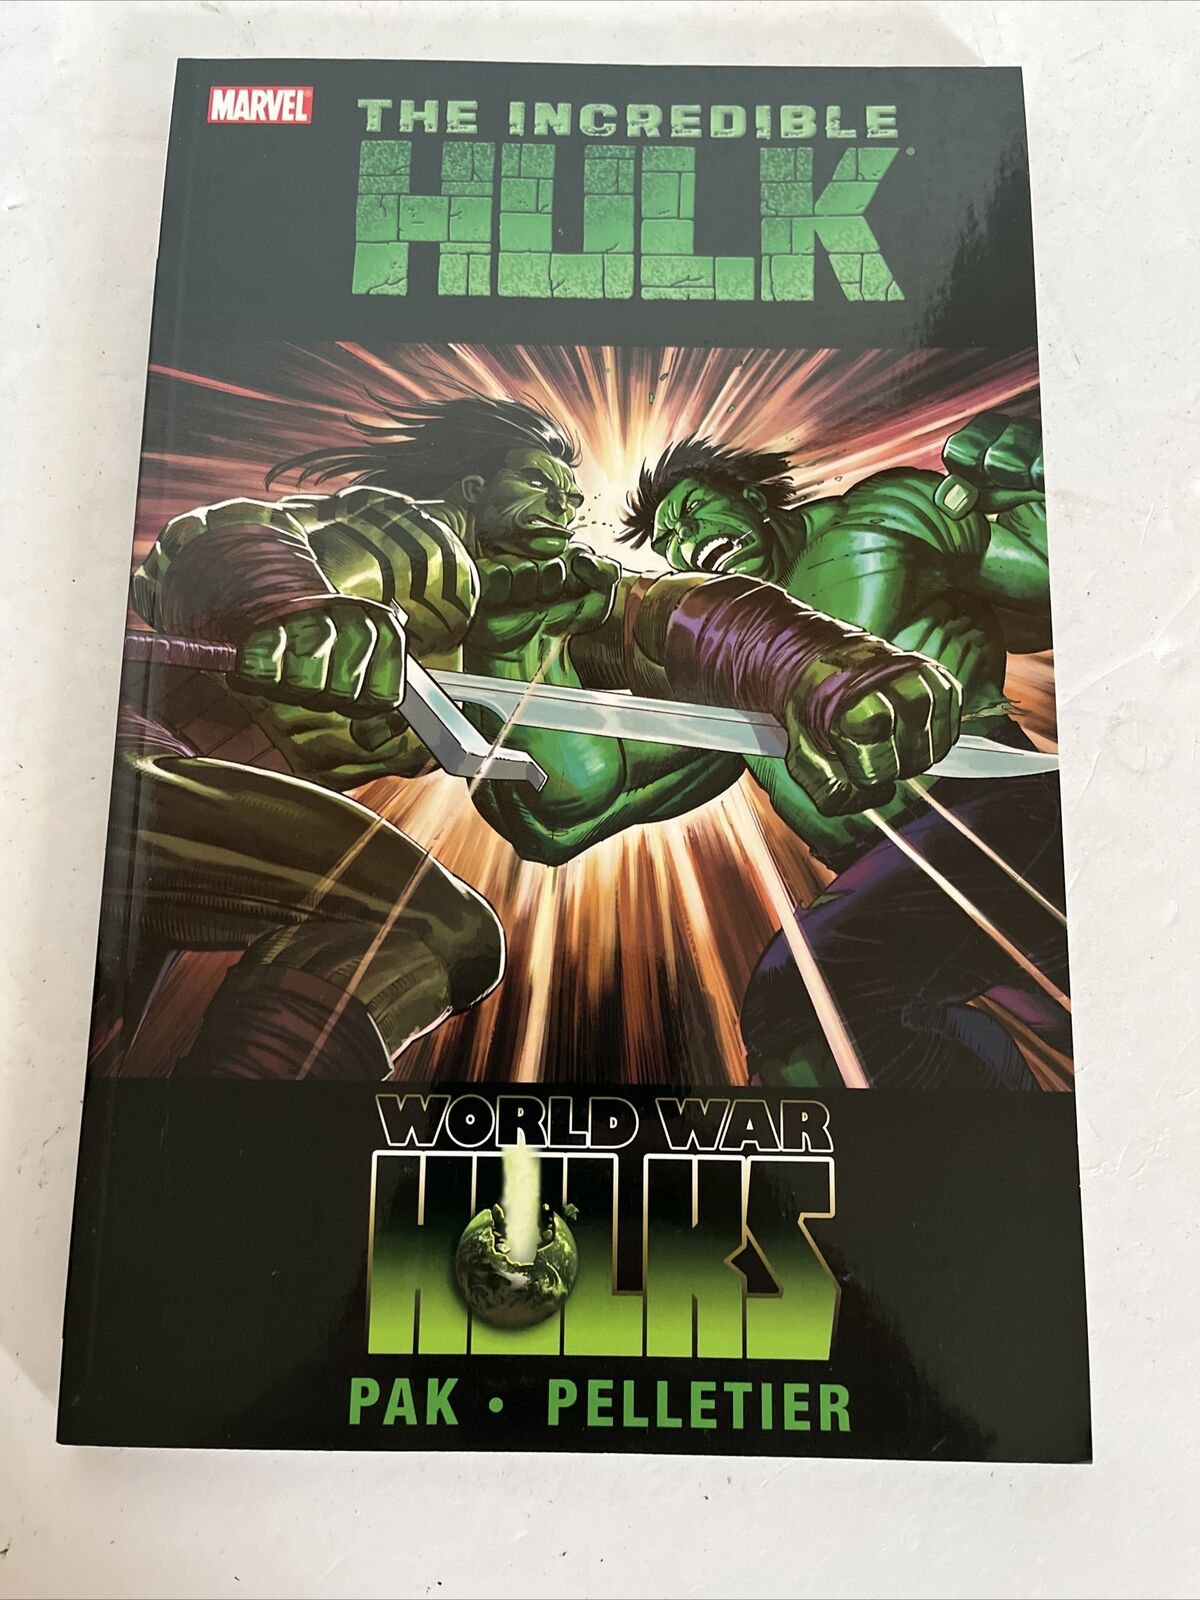 The Incredible Hulk 3: World War Hulks by Greg Pak Graphic Novel. Marvel